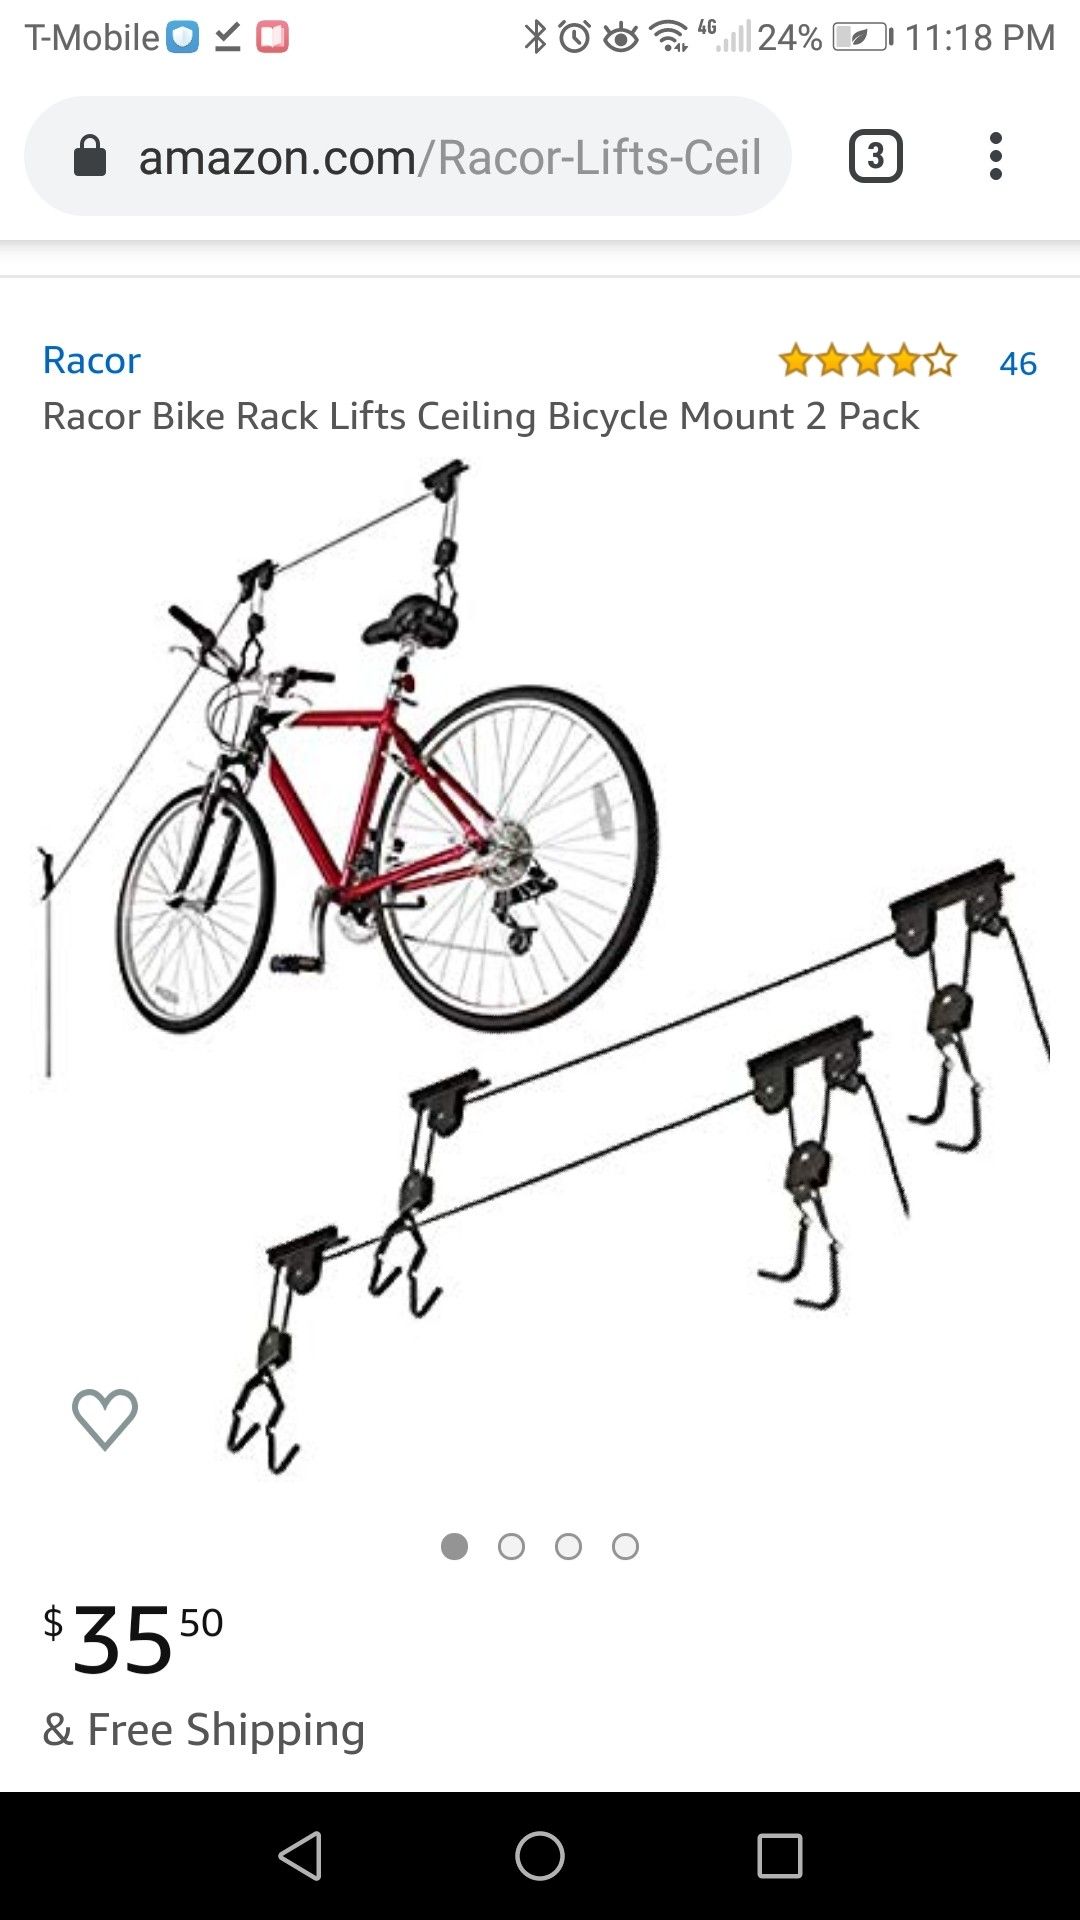 Racor Bike rack